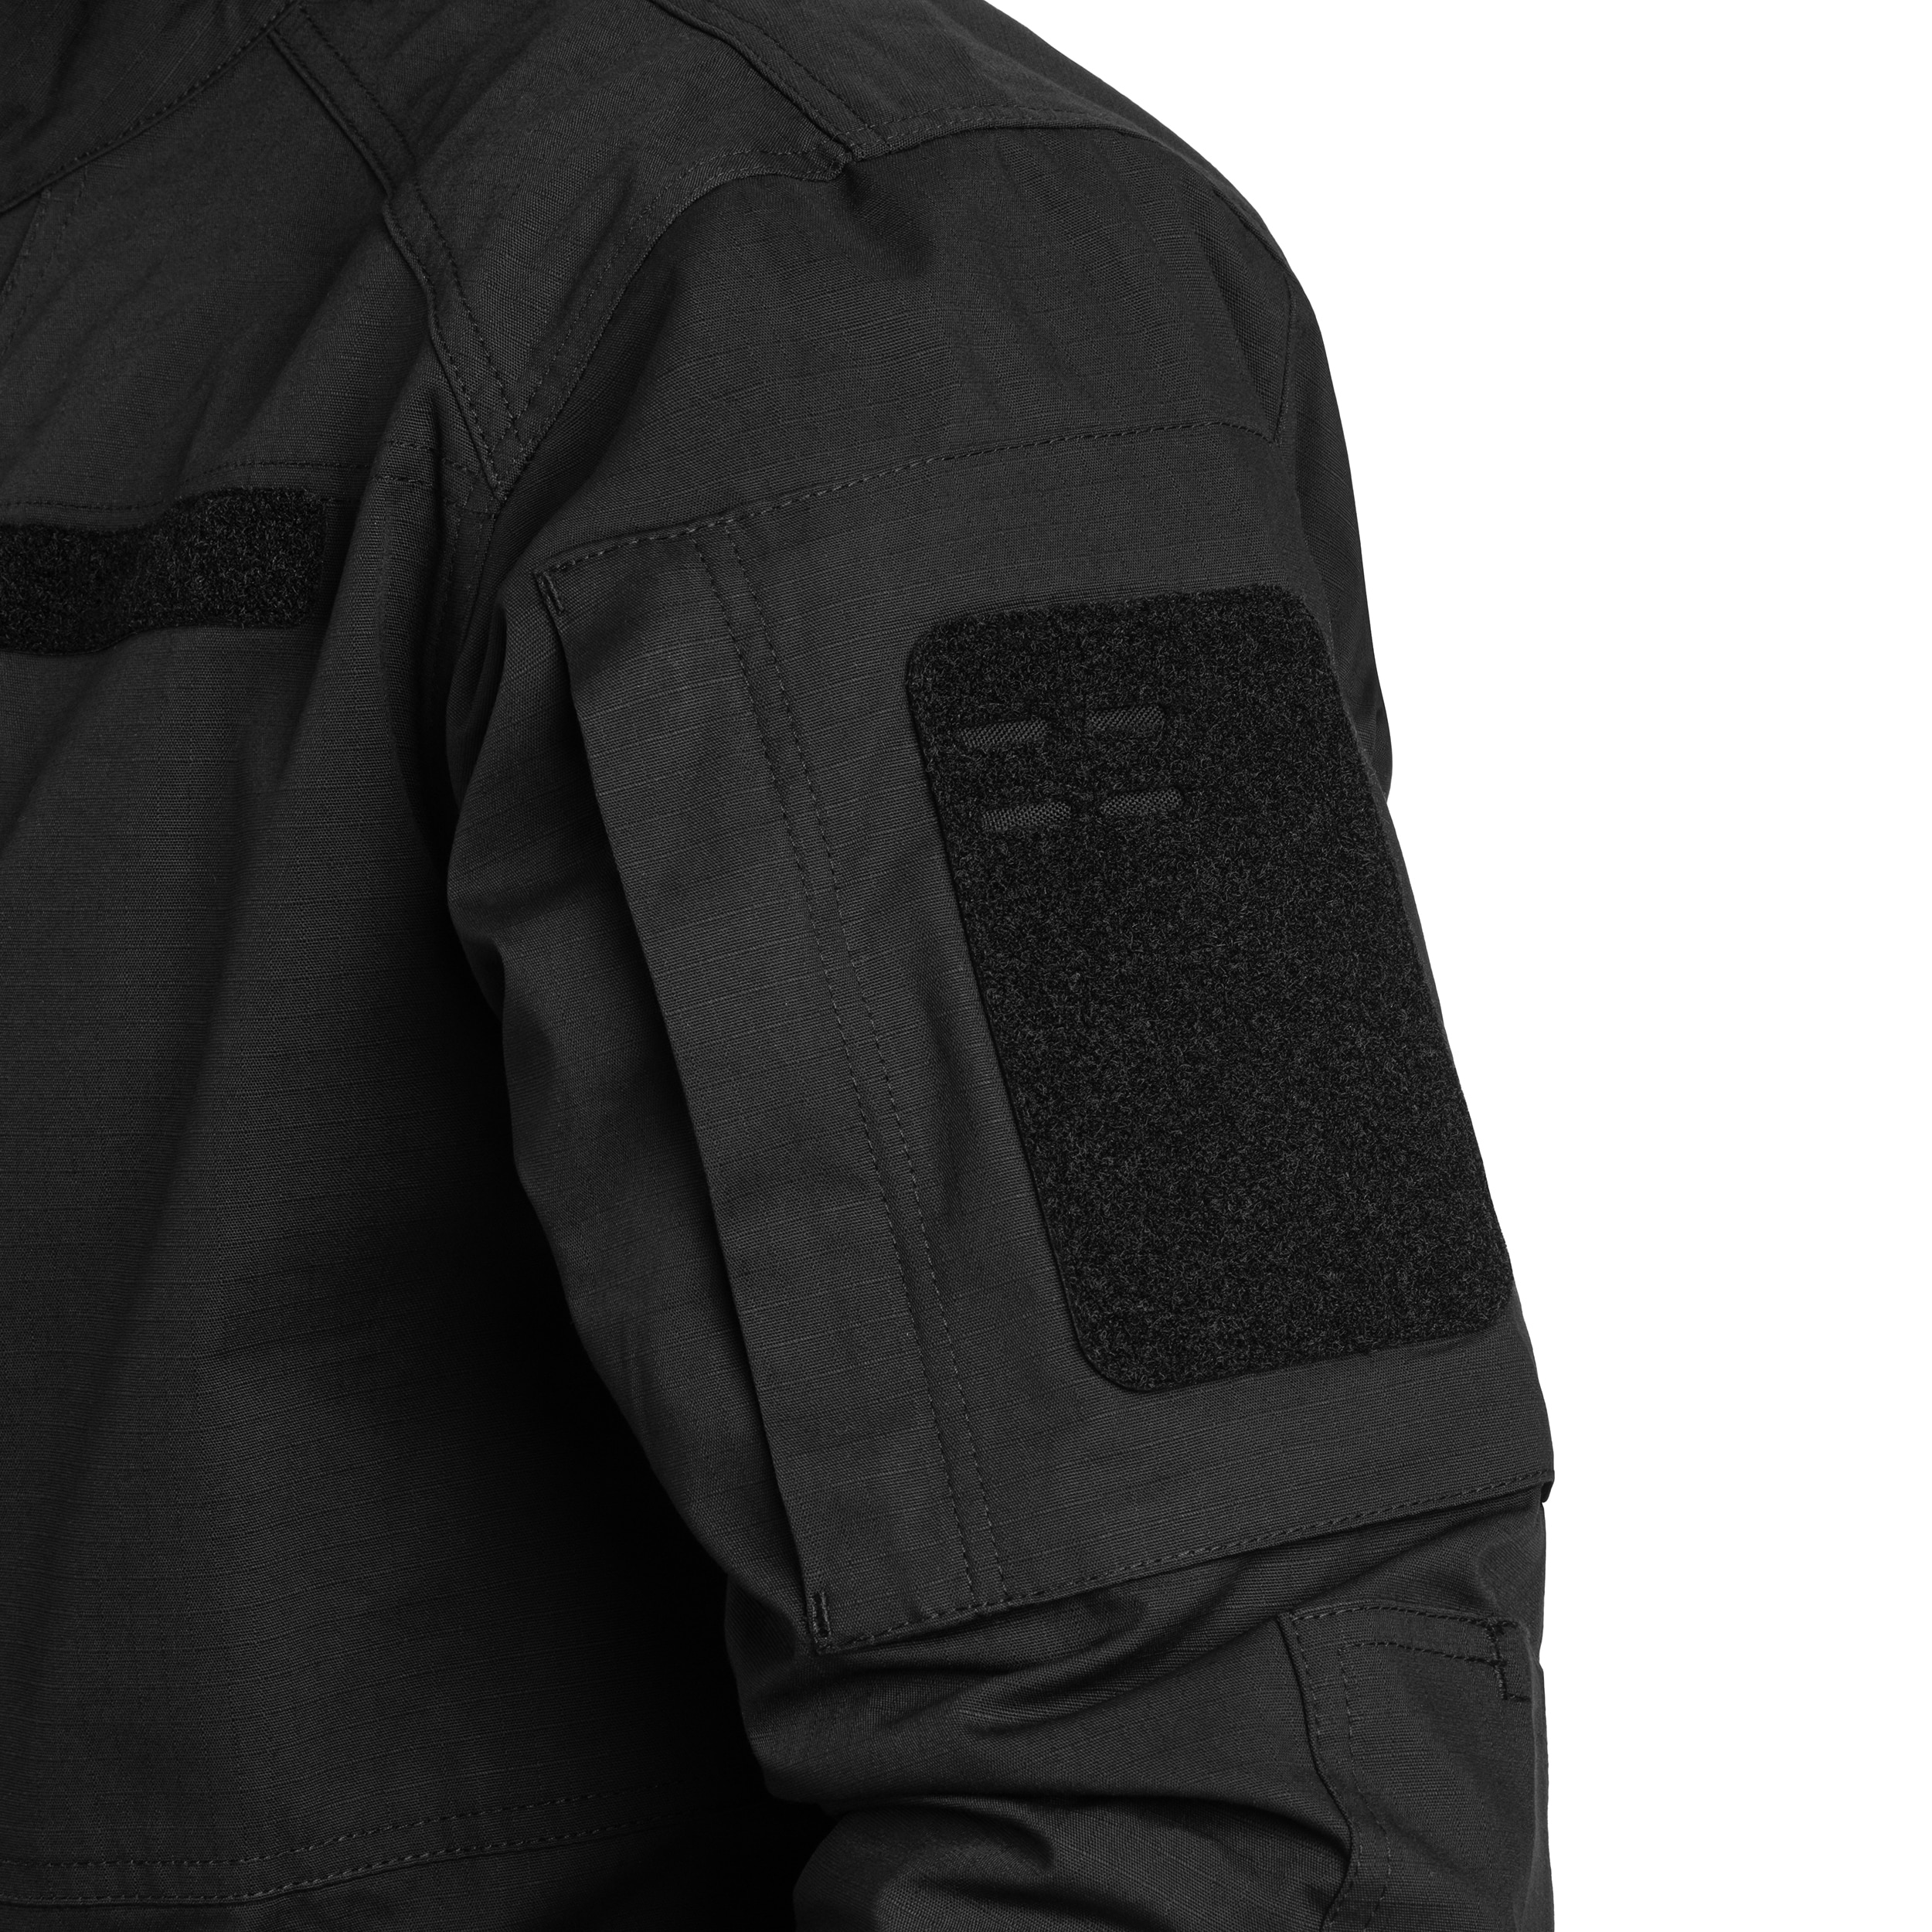 Bluza mundurowa M-Tac Patrol Flex - Black